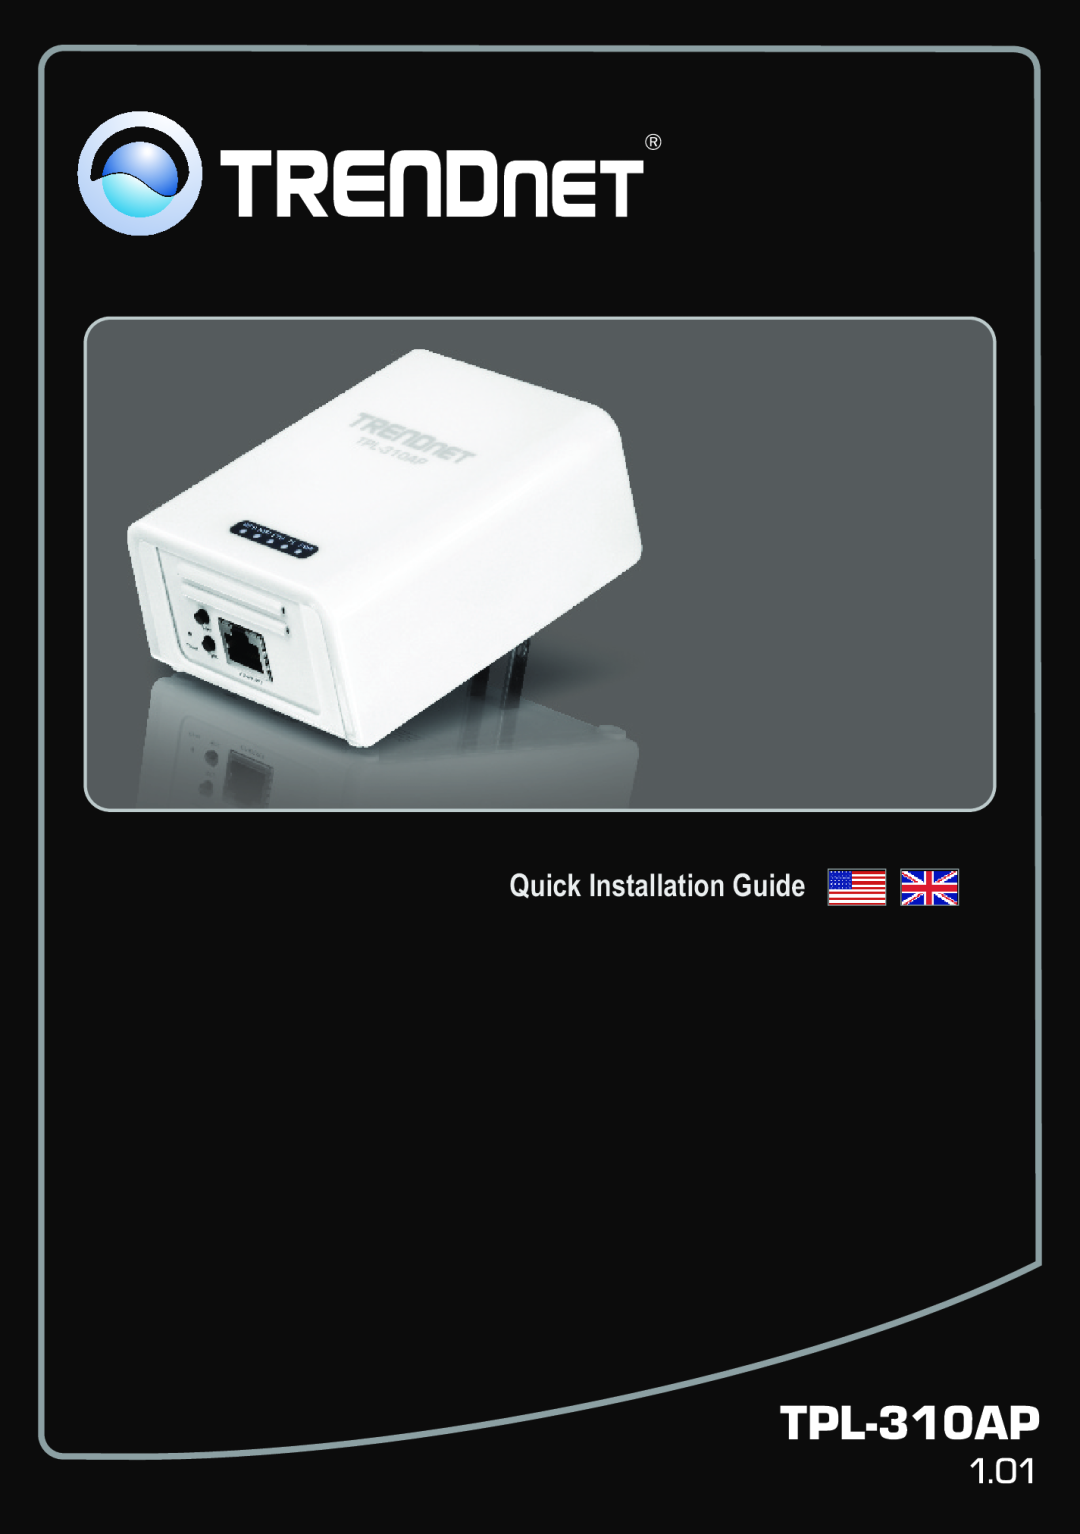 TRENDnet TRENDNET, tv-ip301w manual Quick Installation Guide, TV-IP301 TV-IP301W 